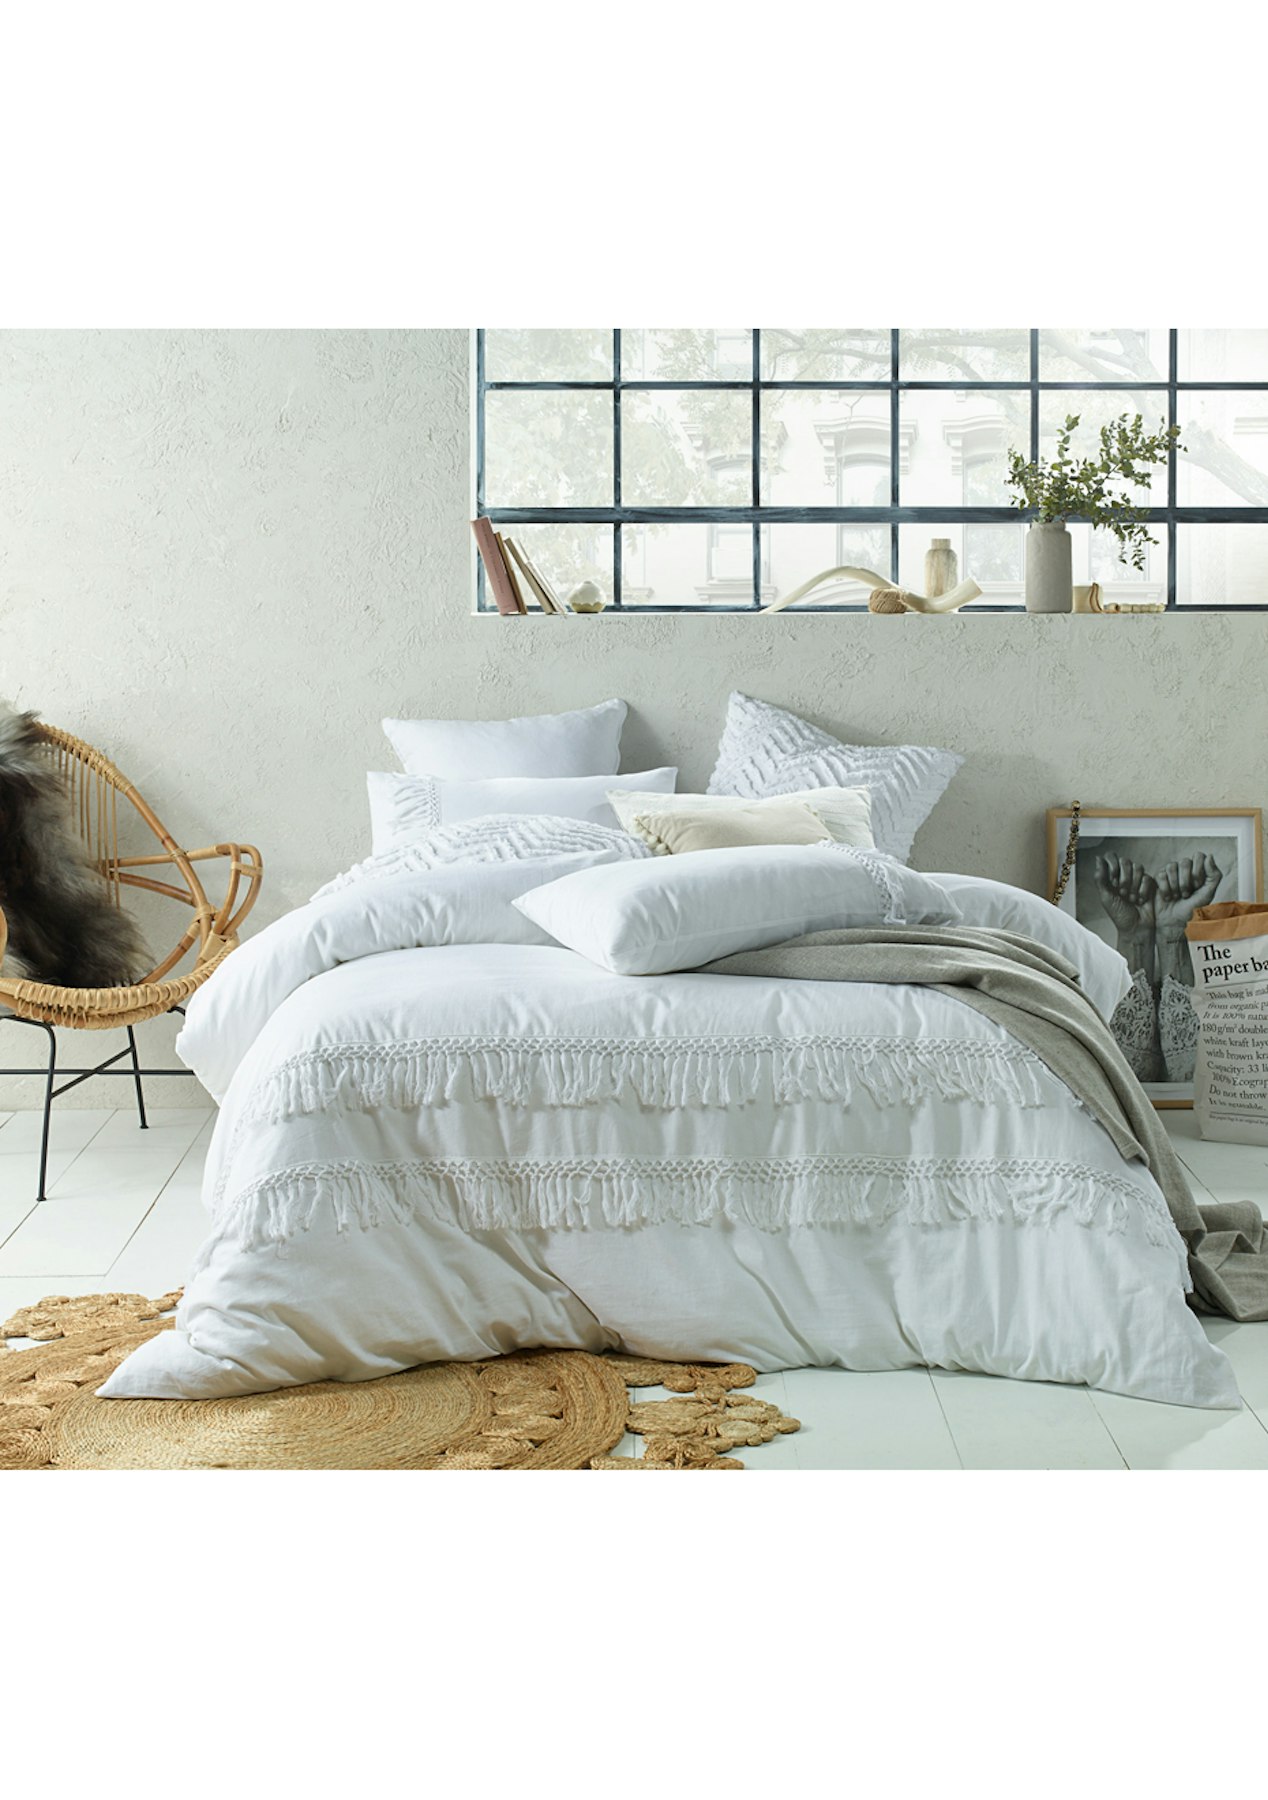 White Boho Linen Cotton Tassel Quilt Cover Set Queen Bed Free